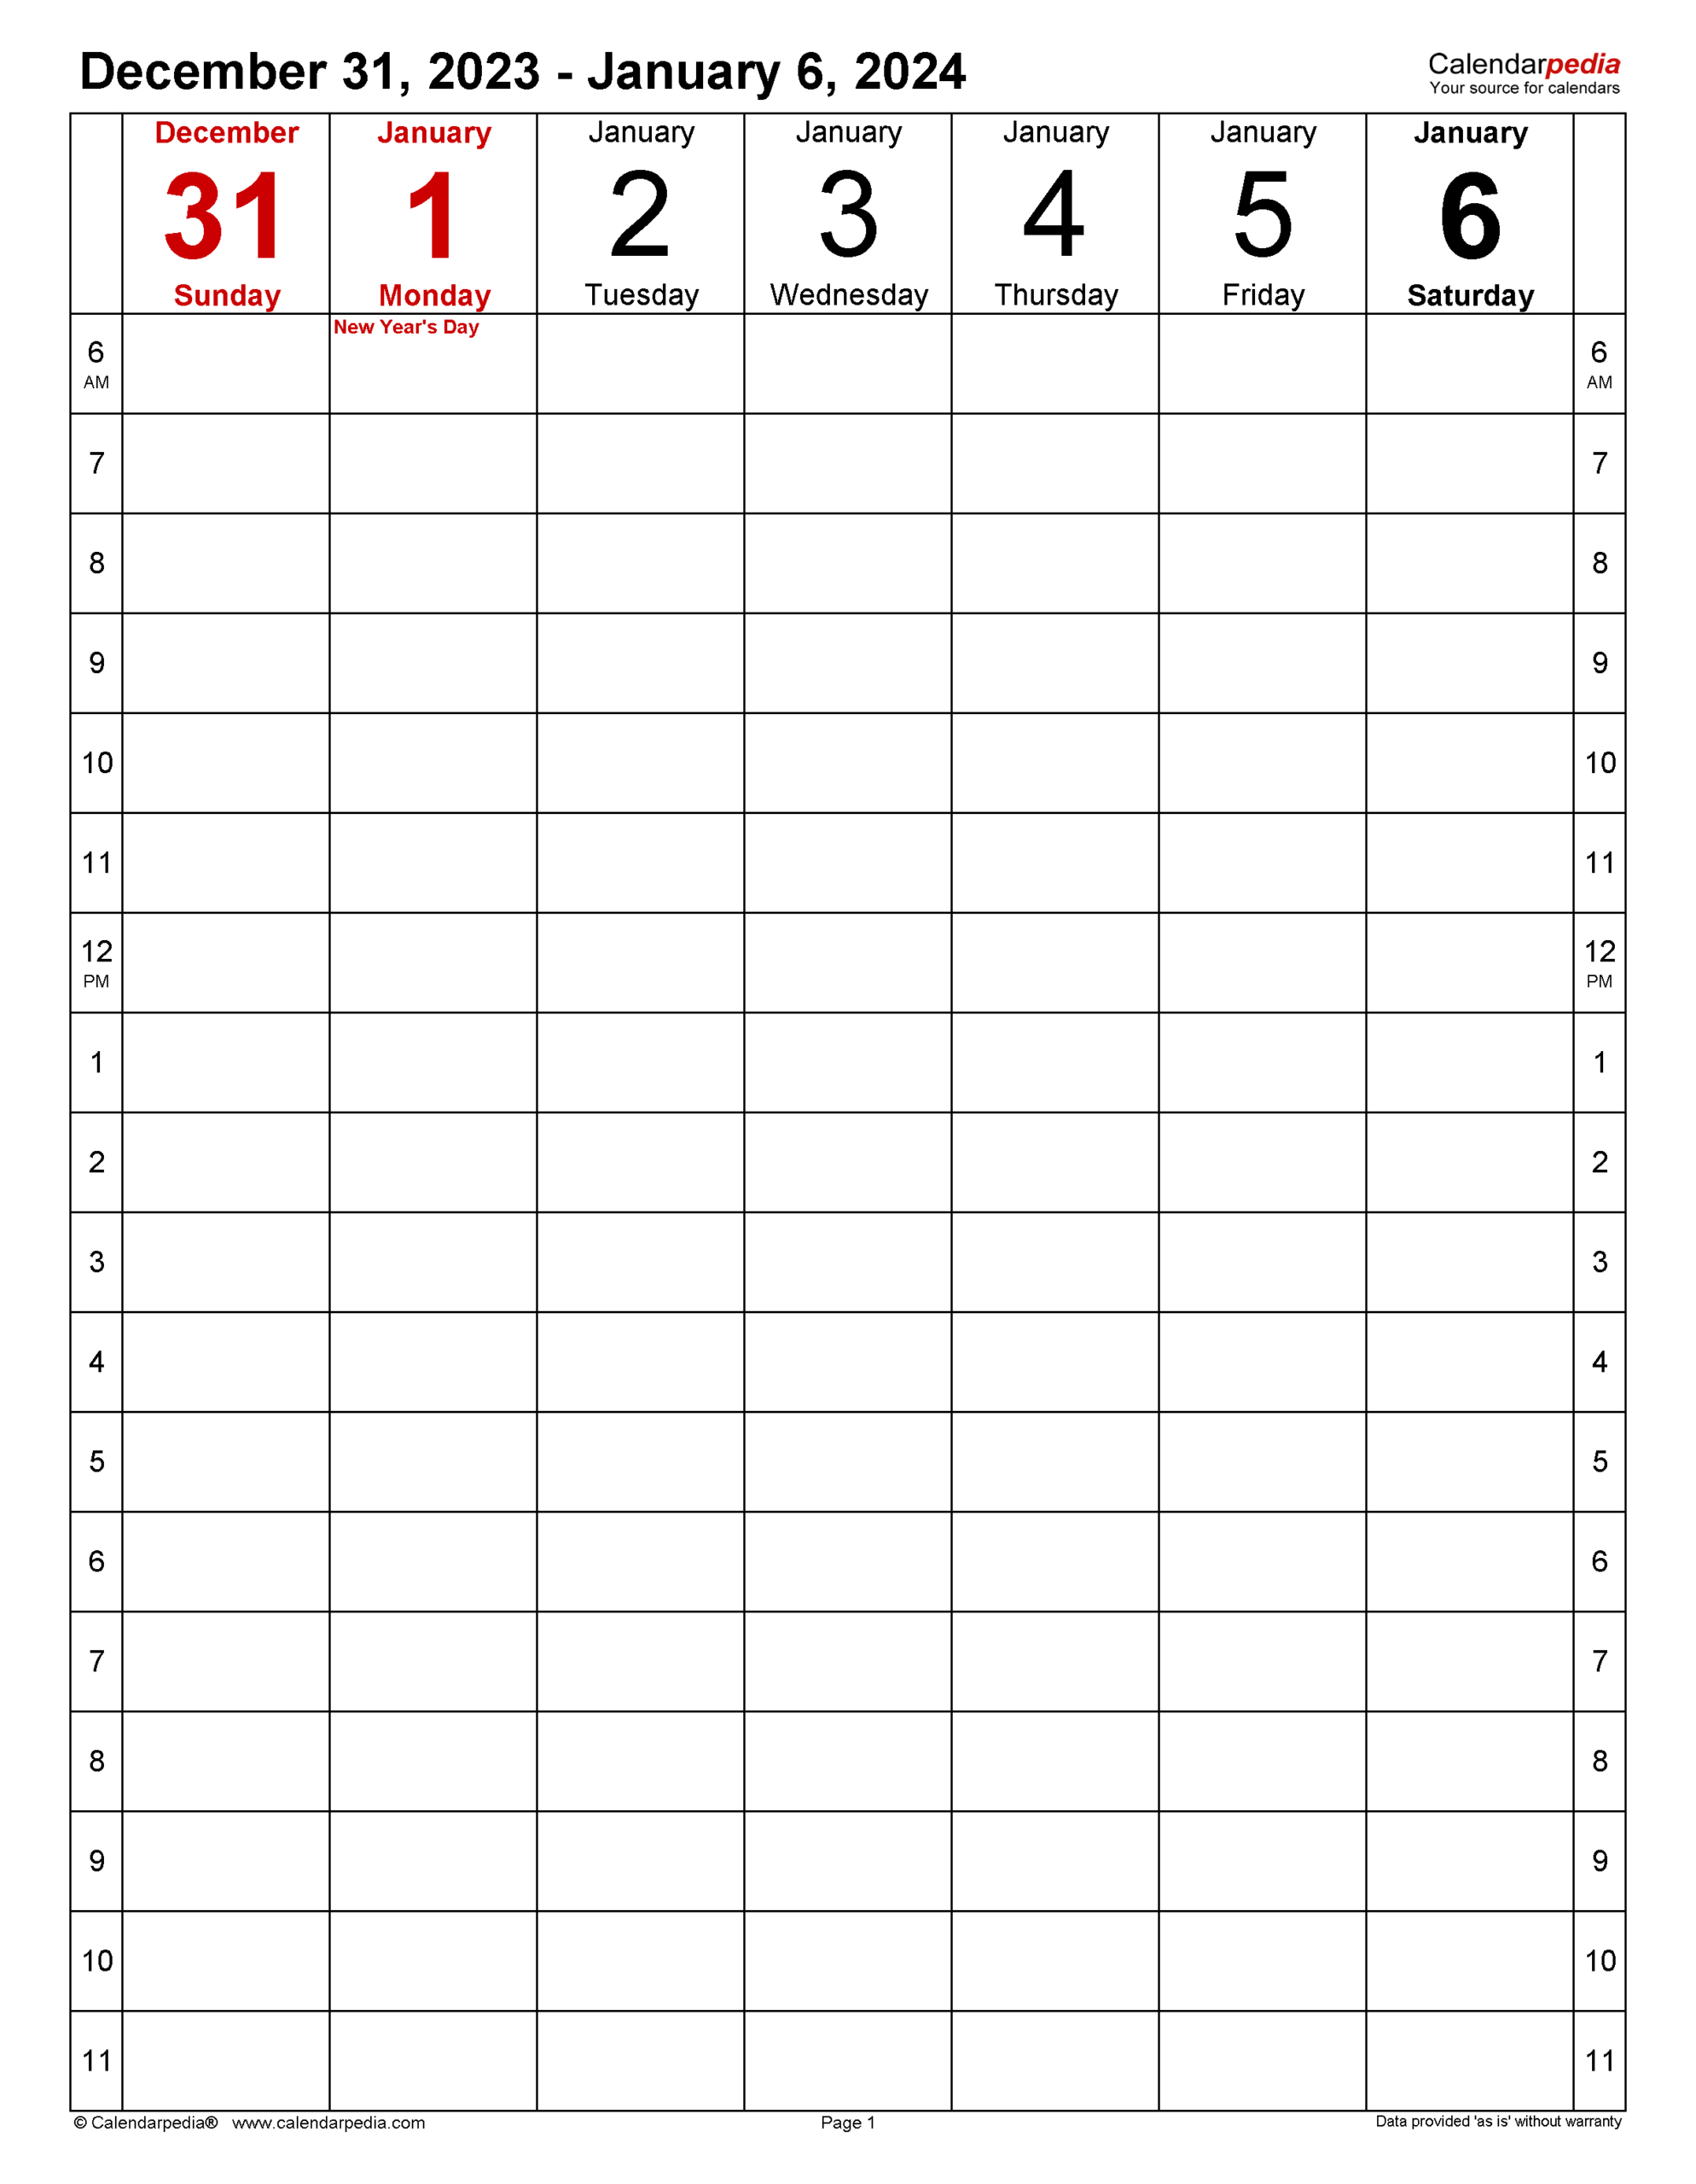 Weekly Calendars 2024 For Pdf - 12 Free Printable Templates | Printable Calendar 2024 Weekly